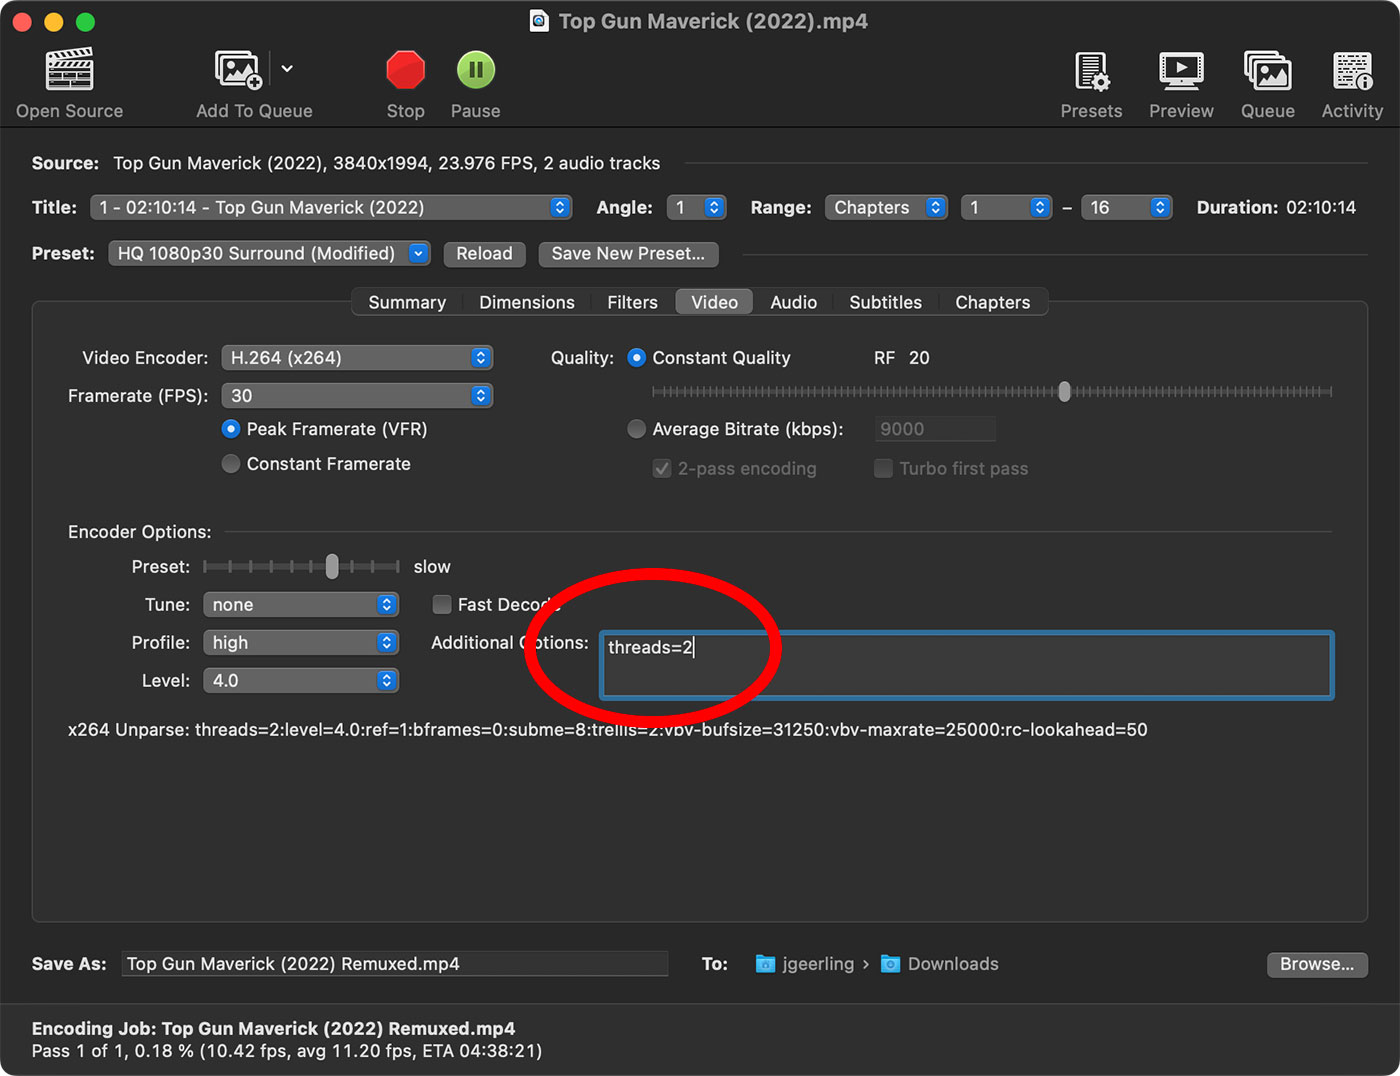 Handbrake threads=2 setting in video encoding options for x264